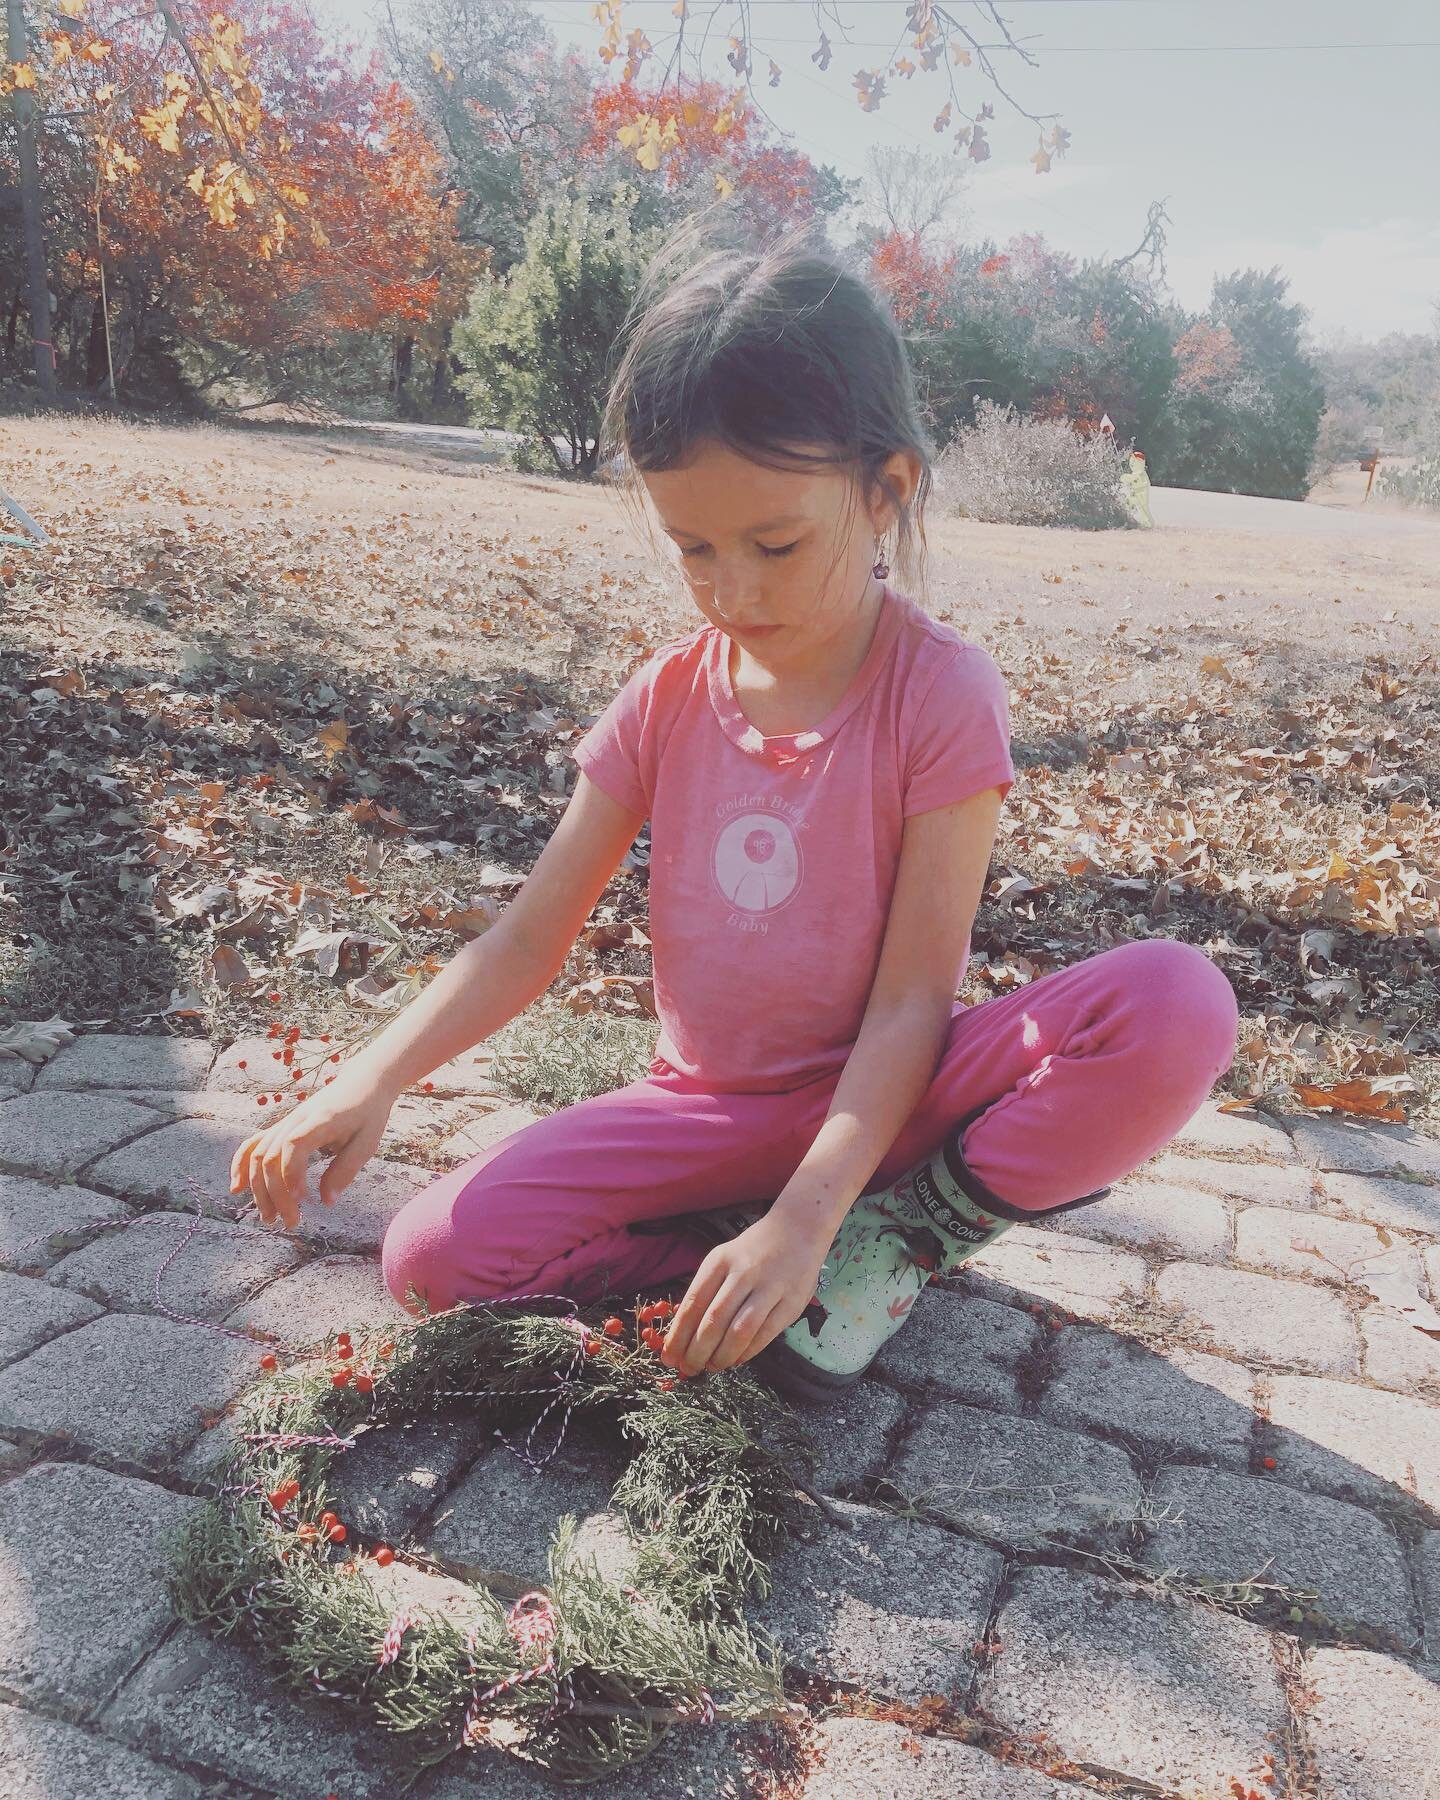 Making a wreath out of juniper 

#exquisite #witchesoftexas #juniper #homeschool #earthschooling #goplayoutside